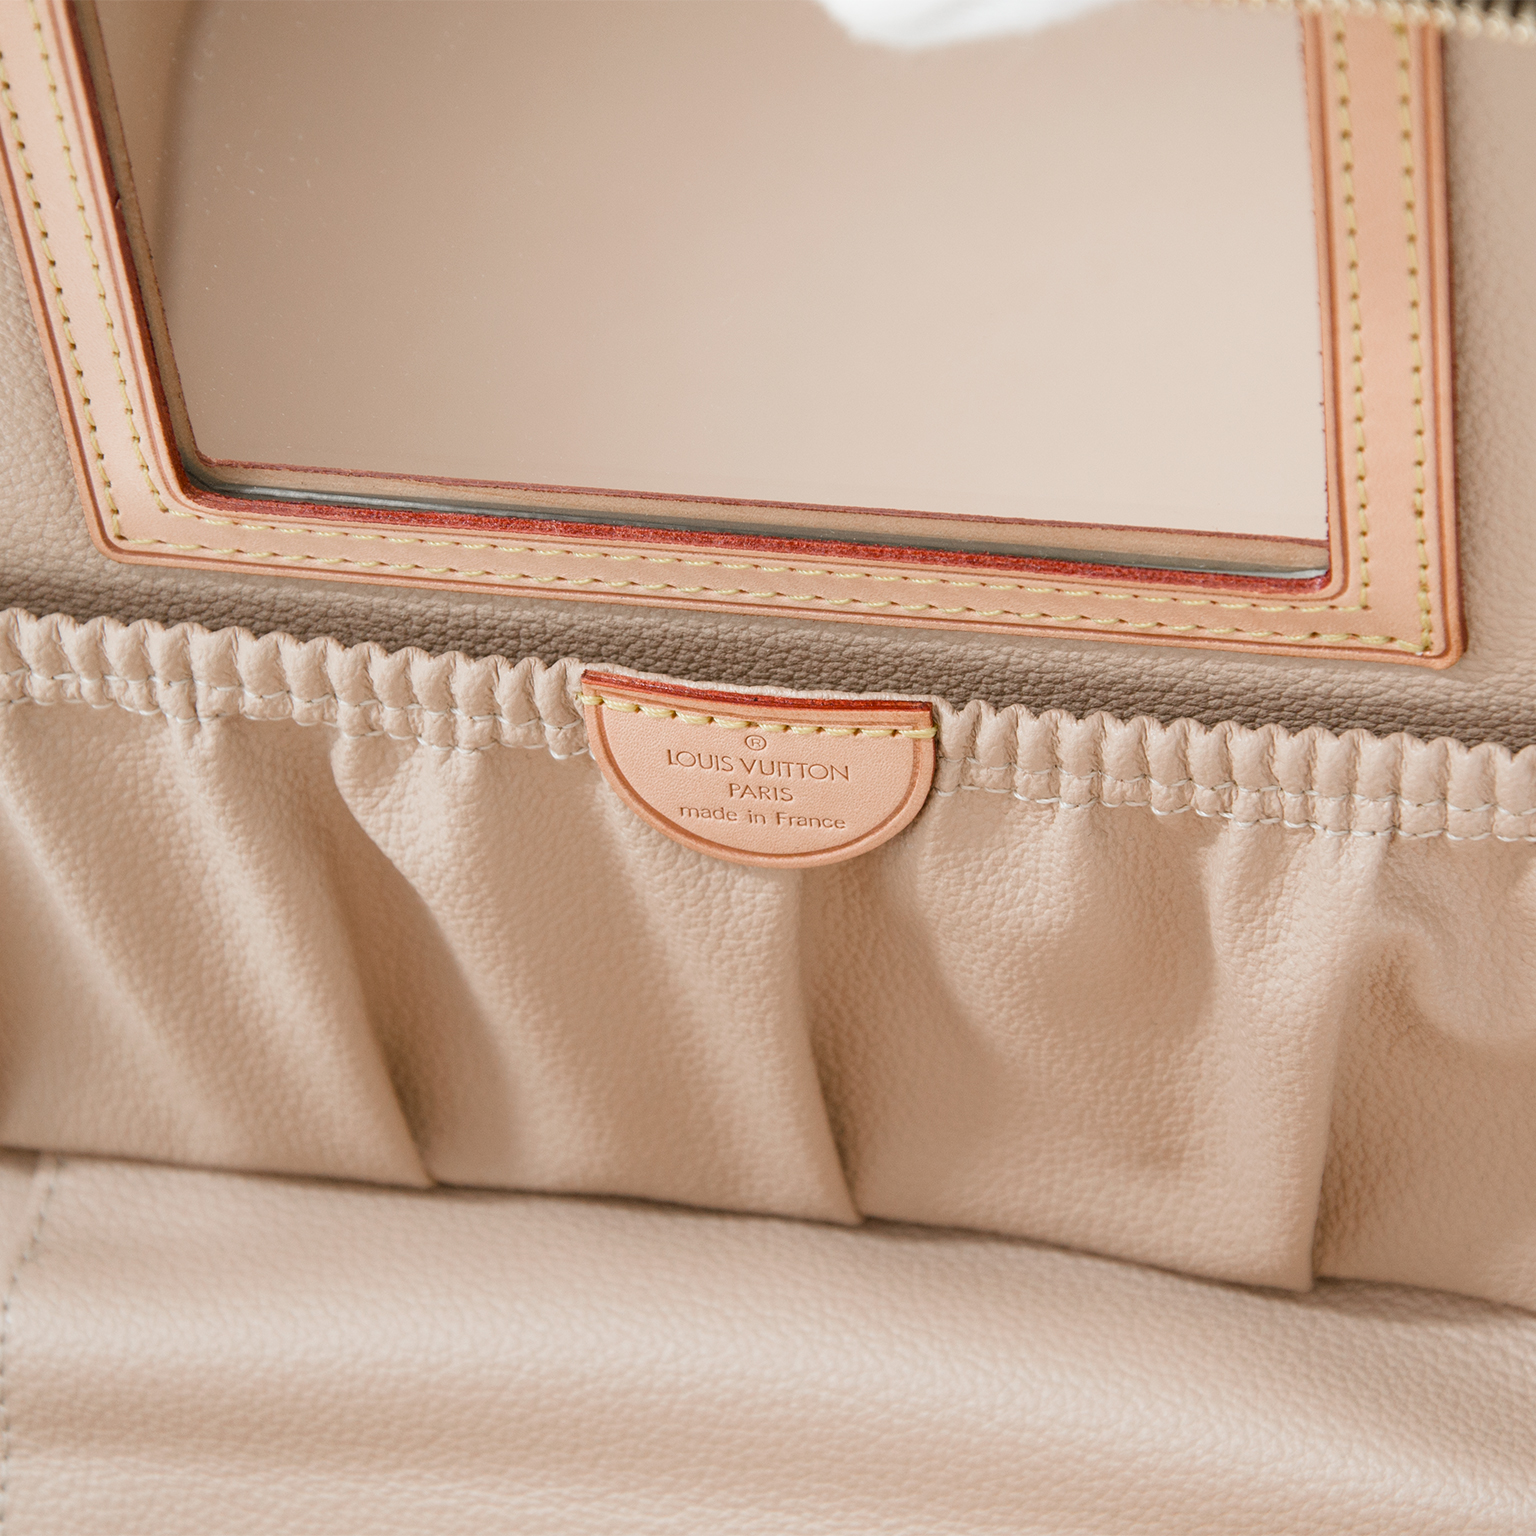 Neceser-cofre Louis Vuitton Vanity Case Monogram I CBL Bags